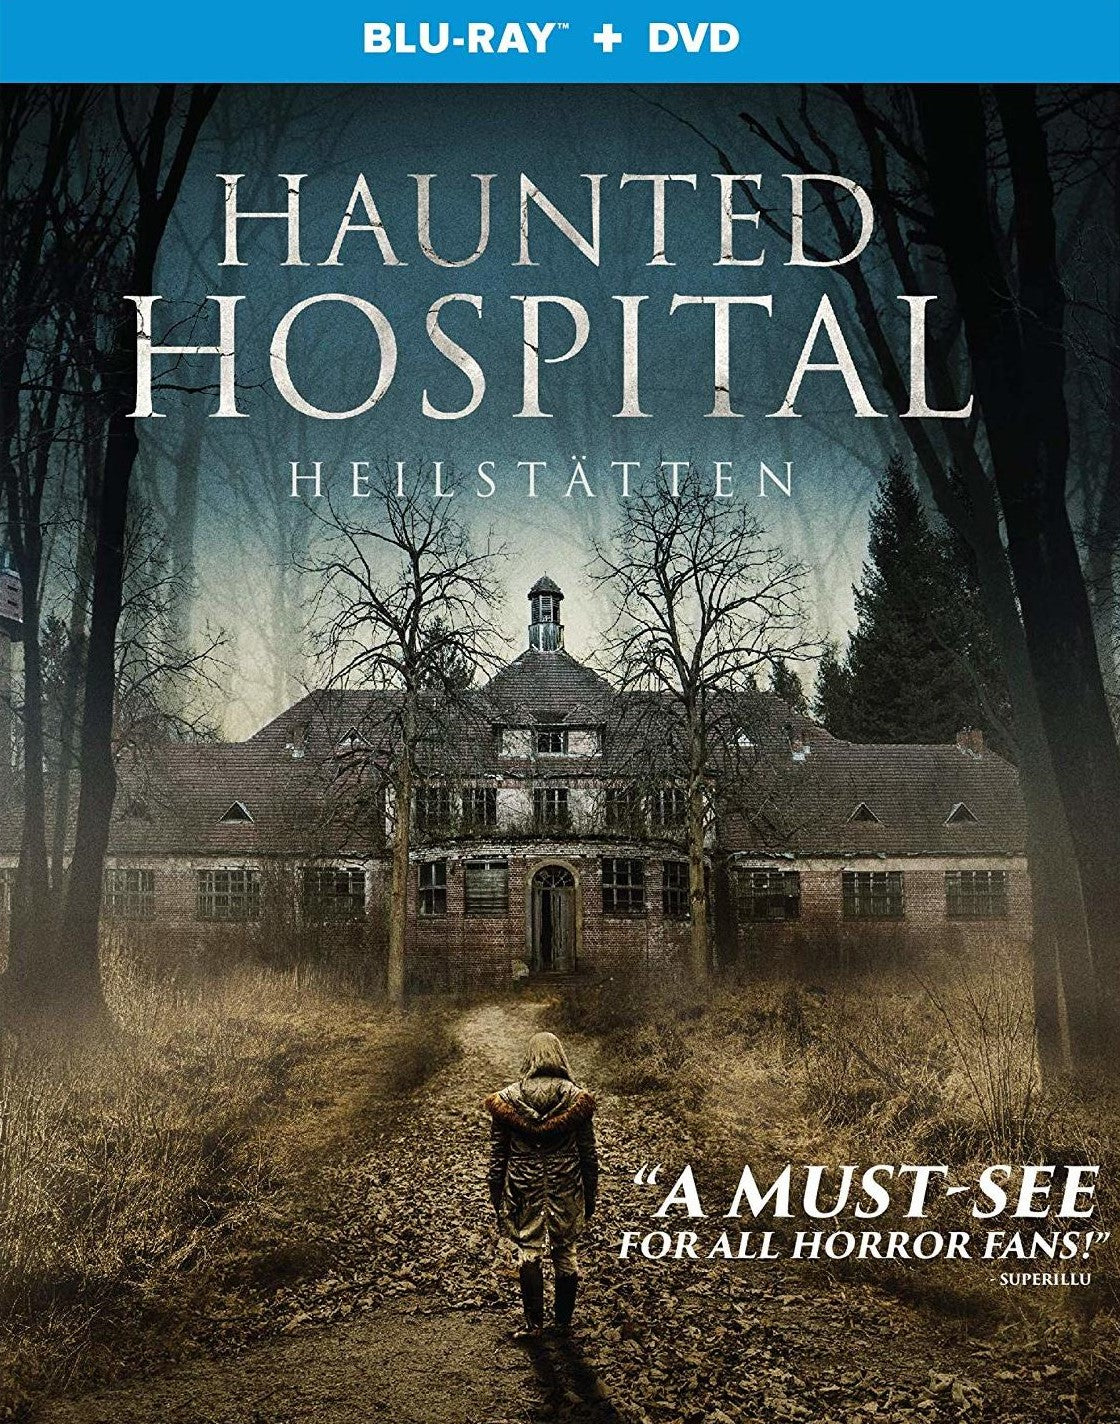 HAUNTED HOSPITAL: HEILSTATTEN BLU-RAY/DVD